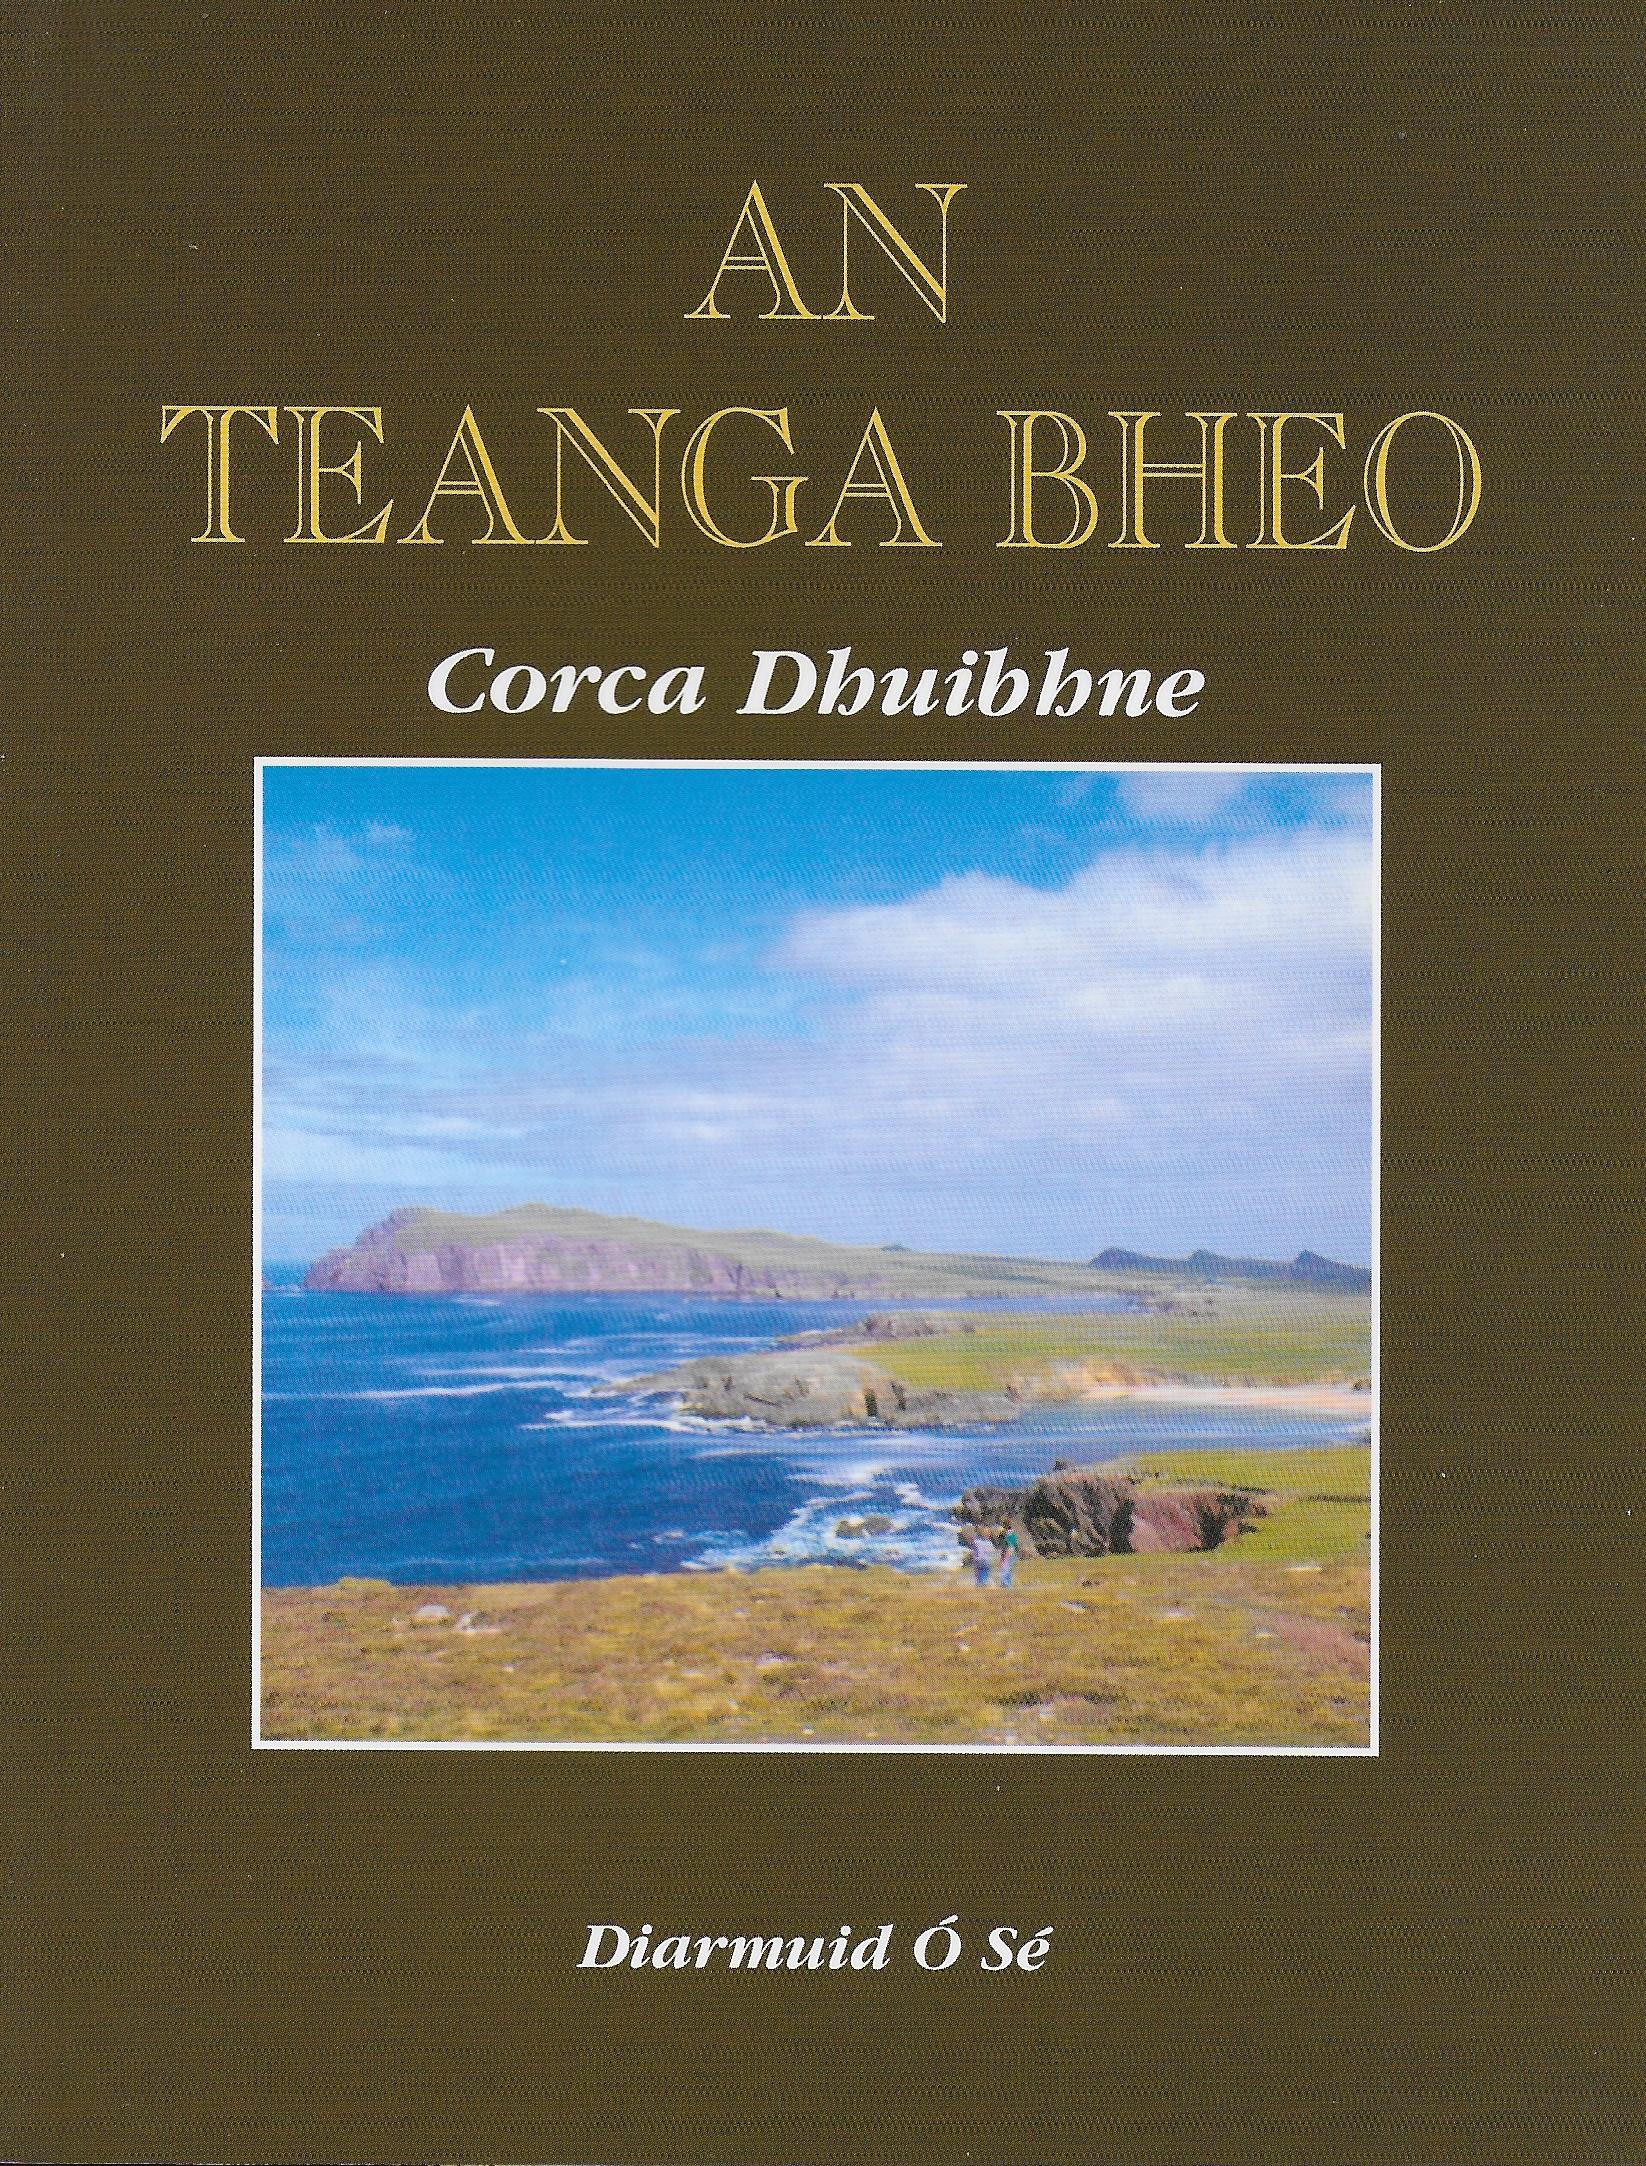 An Teanga Bheo (Corca Dhuibhne)